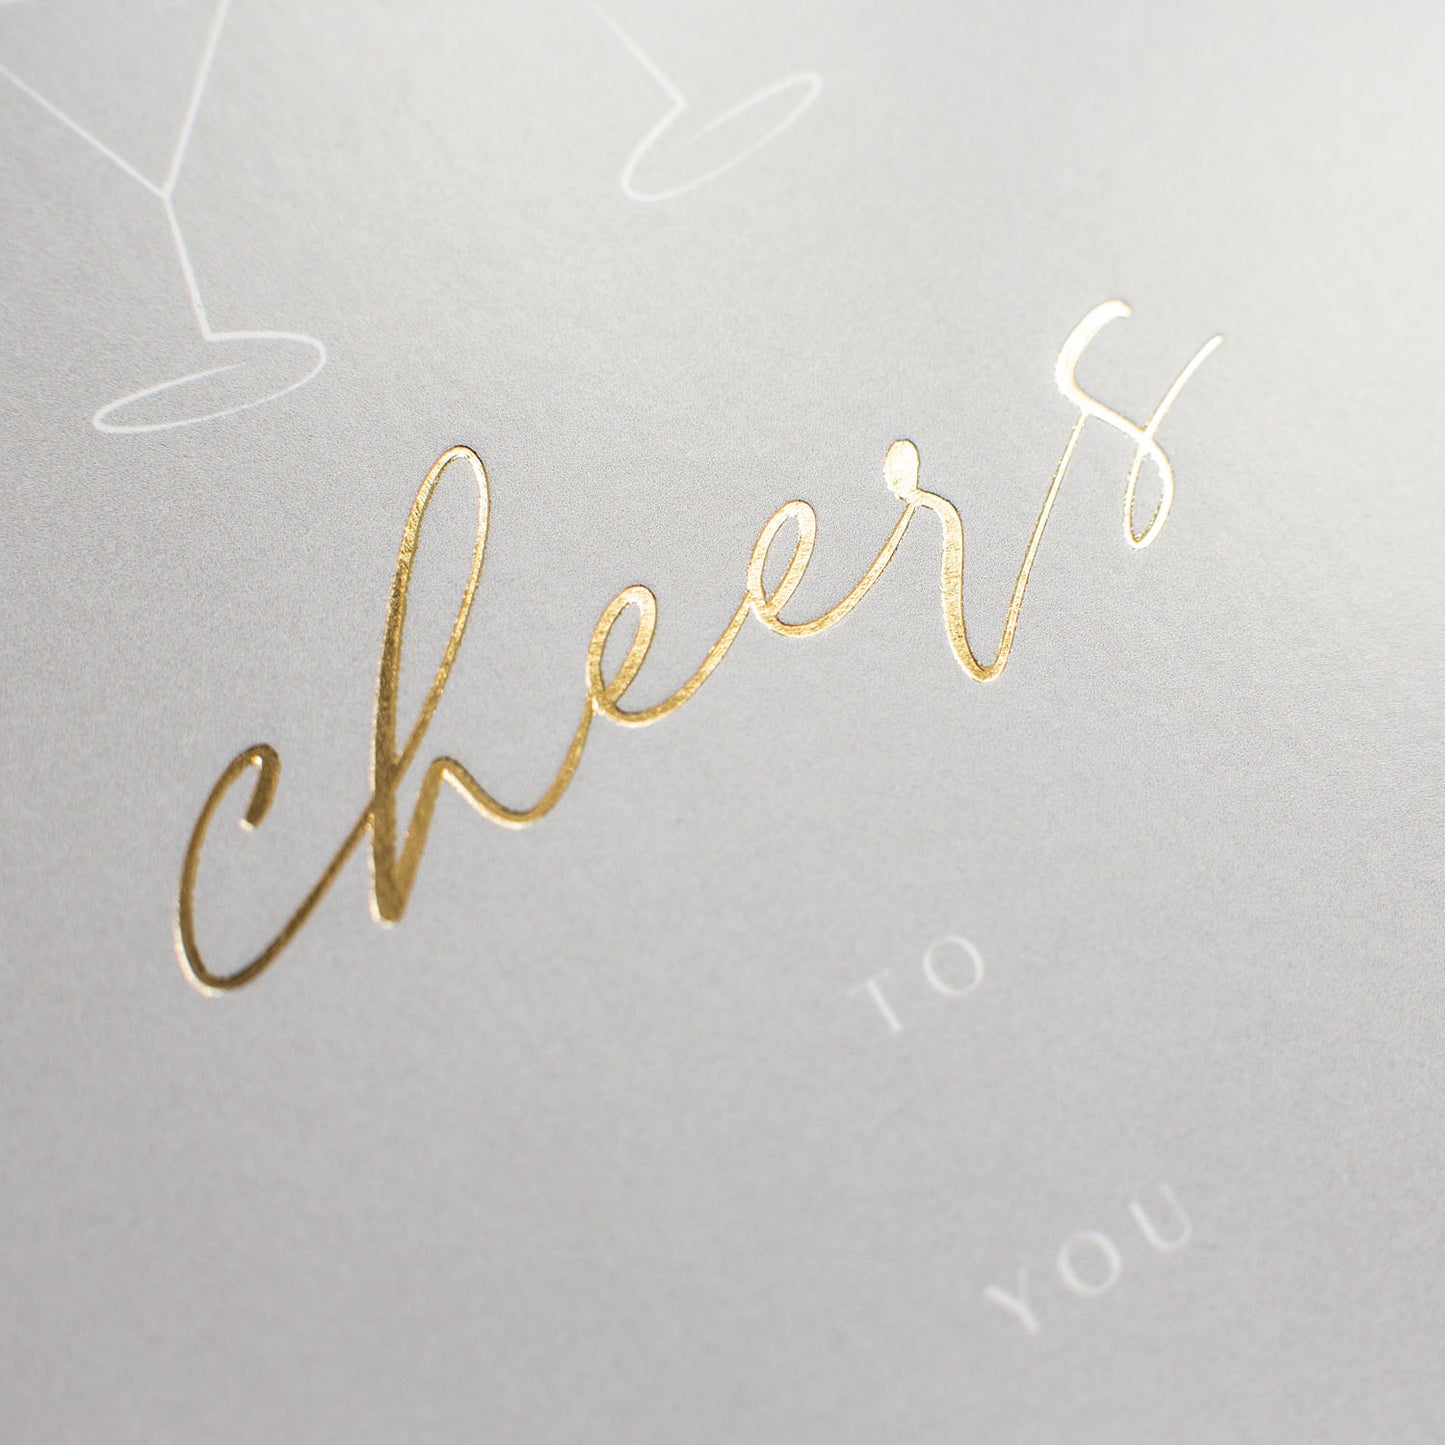 Postkarten gold "Cheers", "Birthday" & "xoxo"